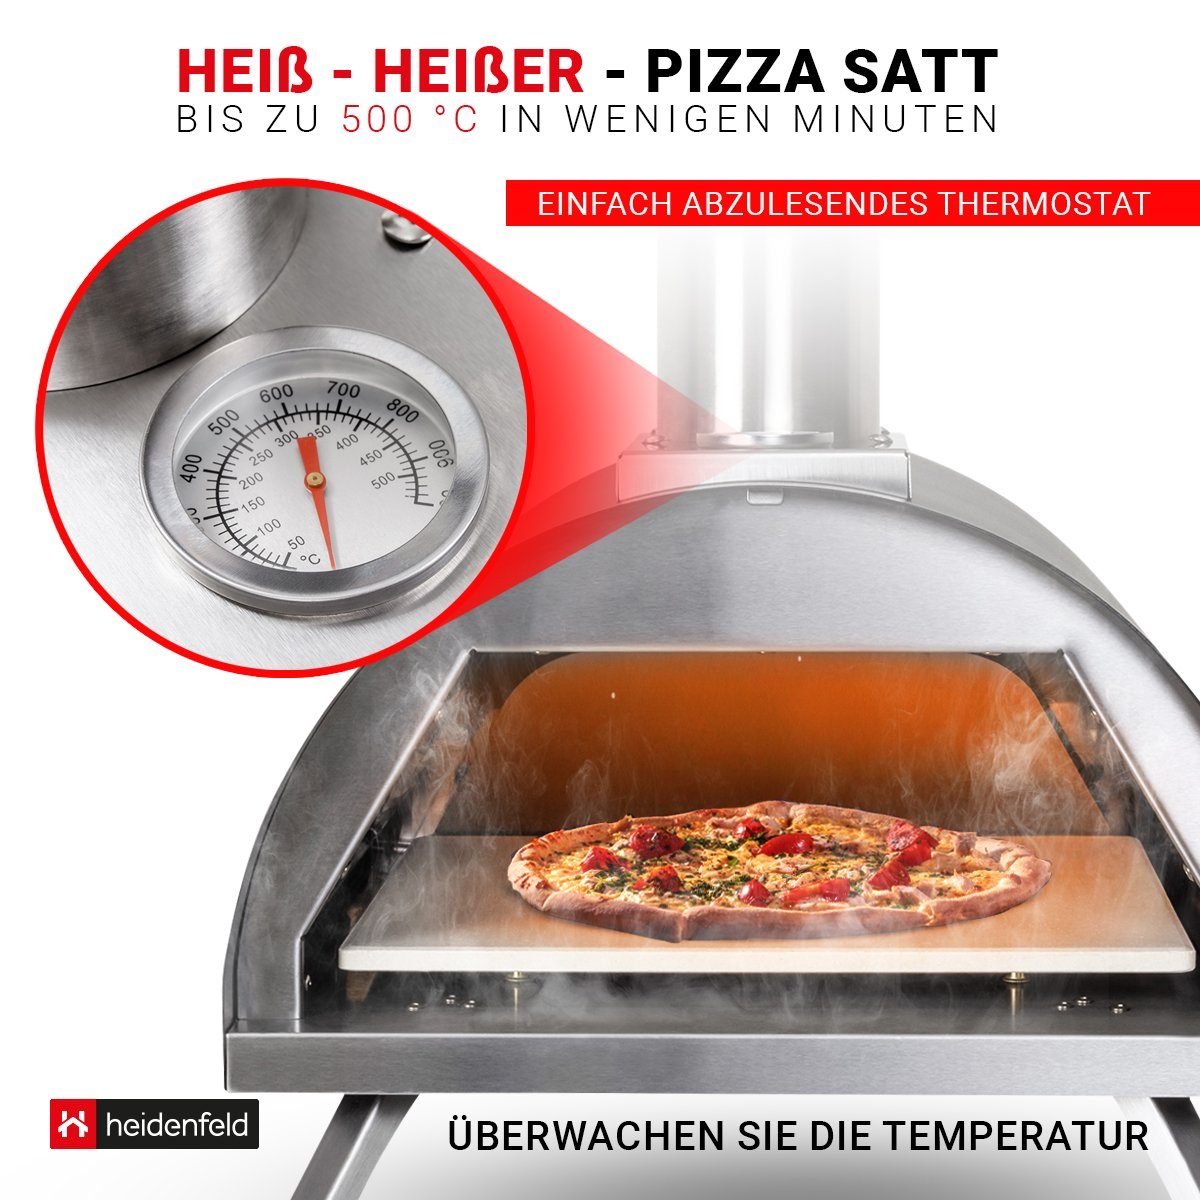 bis Holzofen - Ofen Pellets - Sichtfenster 2in1 - oder Pizzaofen Hybrid Pizza 500°C, Neapel Edelstahl Pizzastein inkl. Backofen Gasgril - Heidenfeld